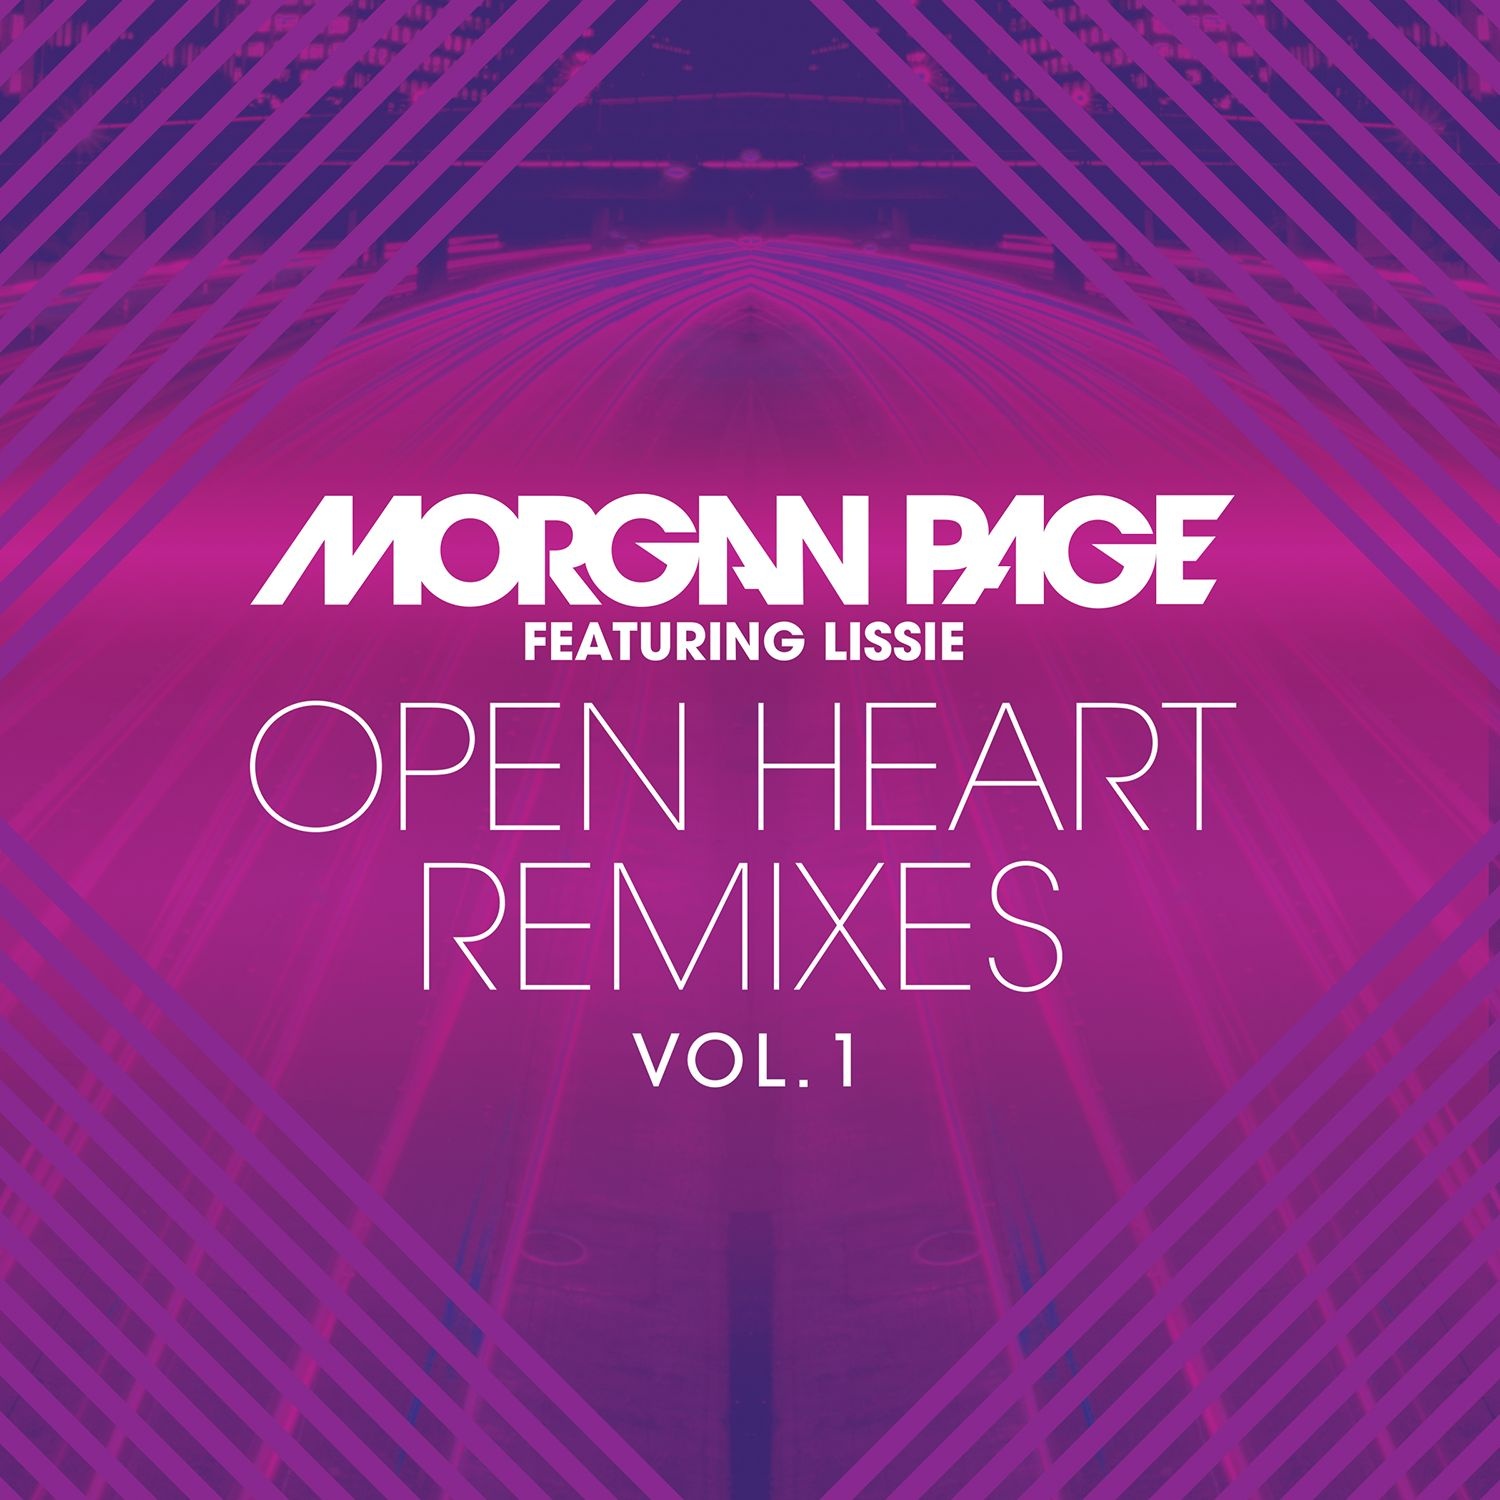 Open Heart Remixes Vol. 1